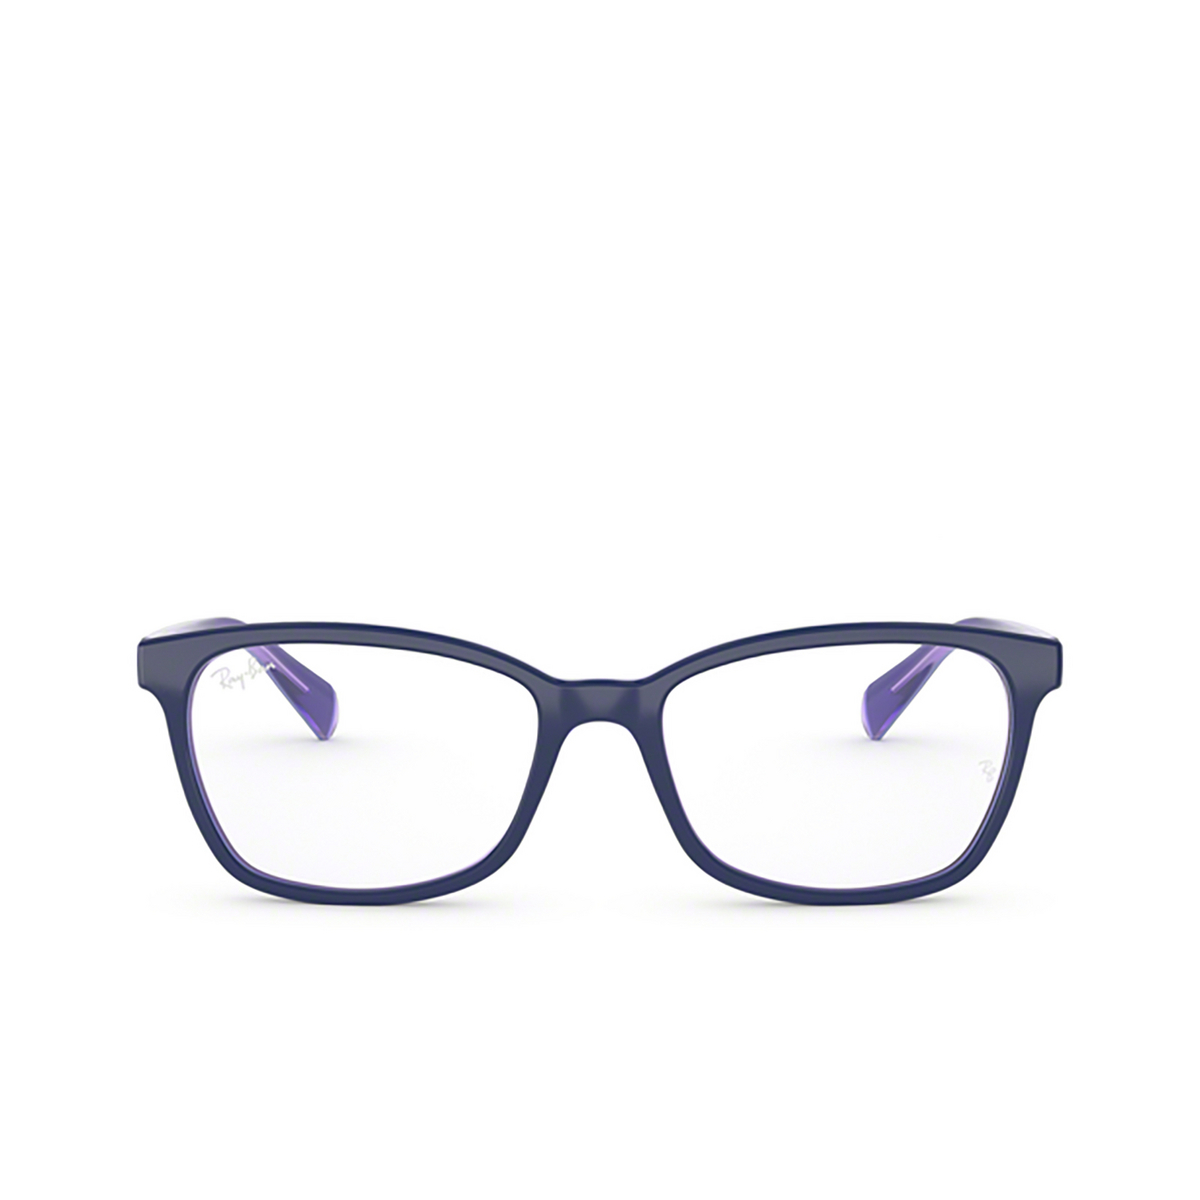 Ray-Ban RX5362 Eyeglasses 5776 TOP BLUE/LT BLUE/TRANSP VIOLET - front view